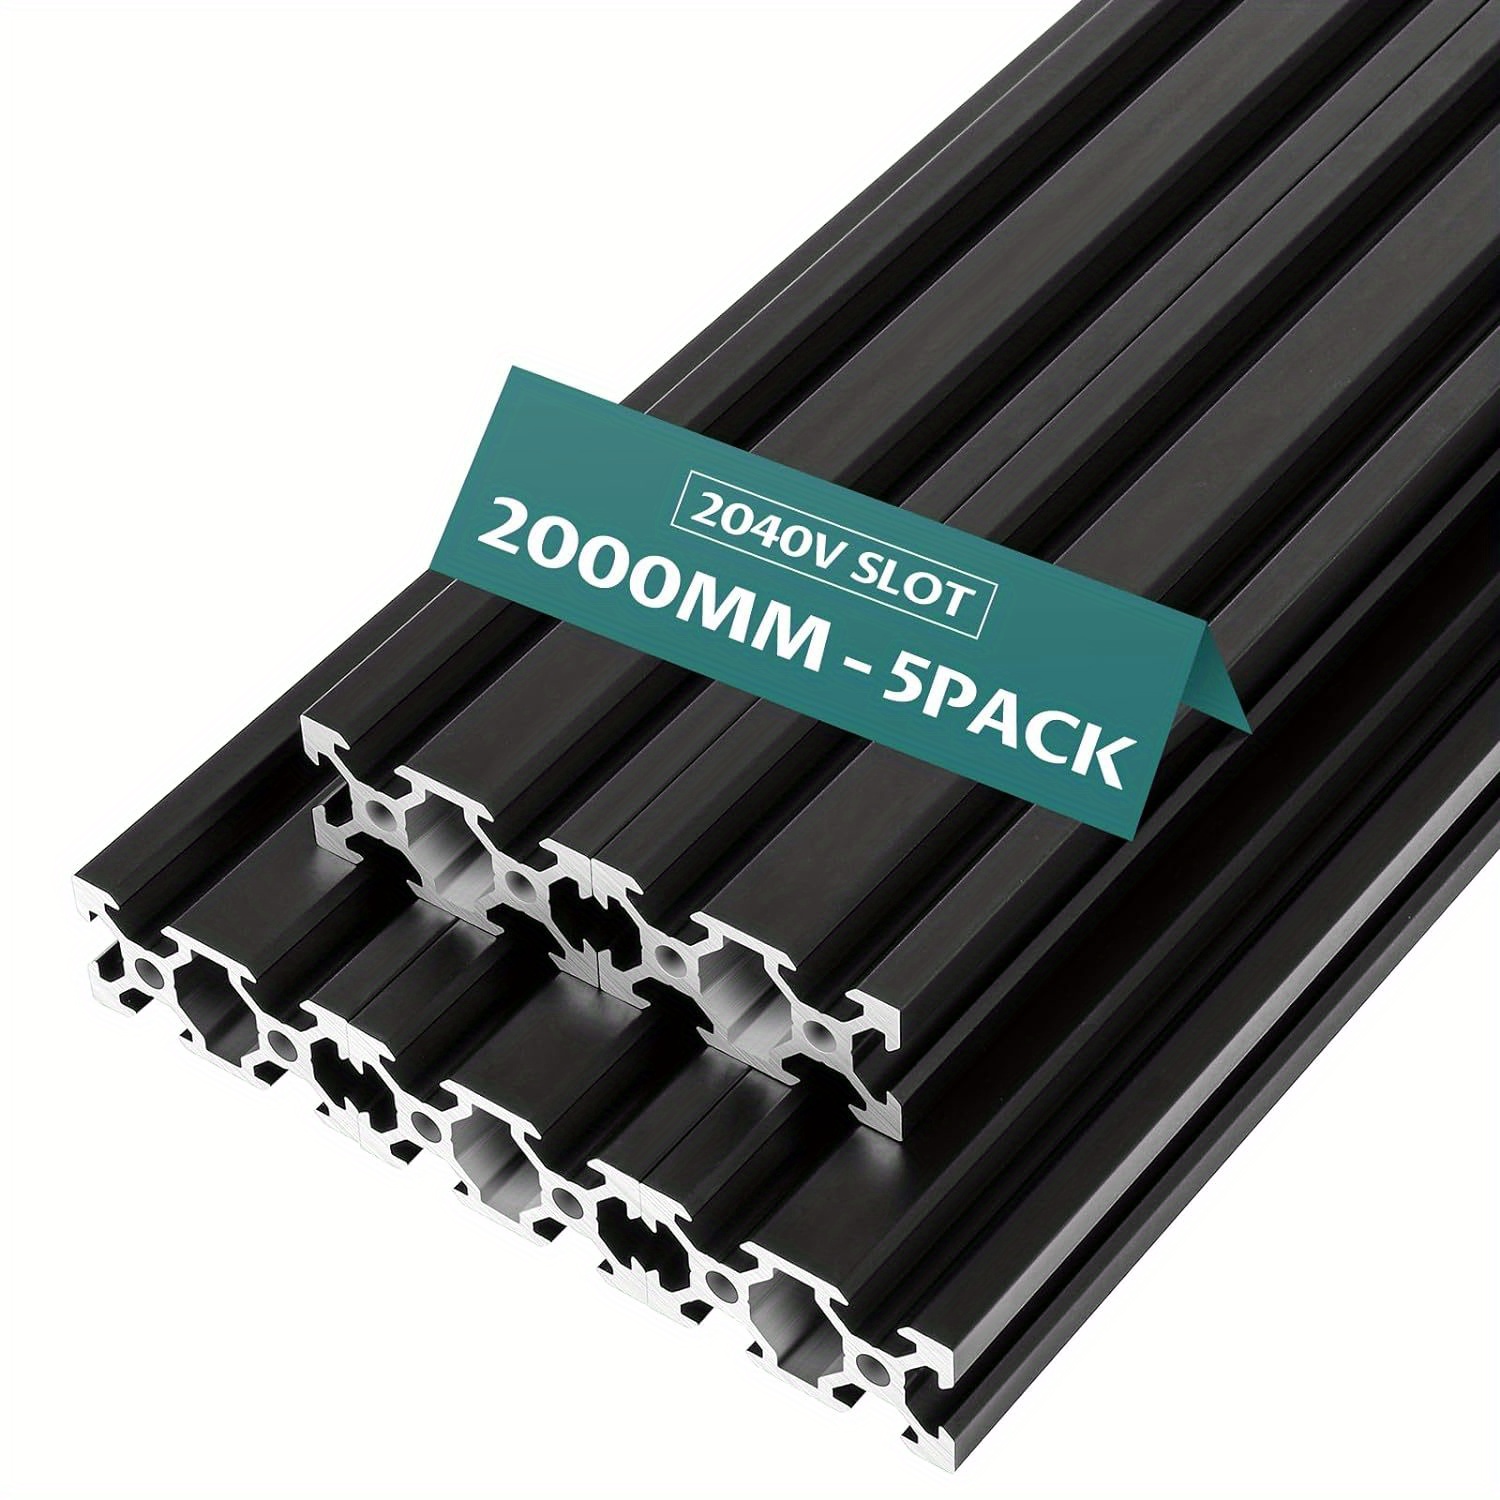 

2000mm 5pcs Blackaluminum Extrusion European Standard 2040 V Slot Anodized Linear Rail For 3d Printer Parts And Cnc Diy